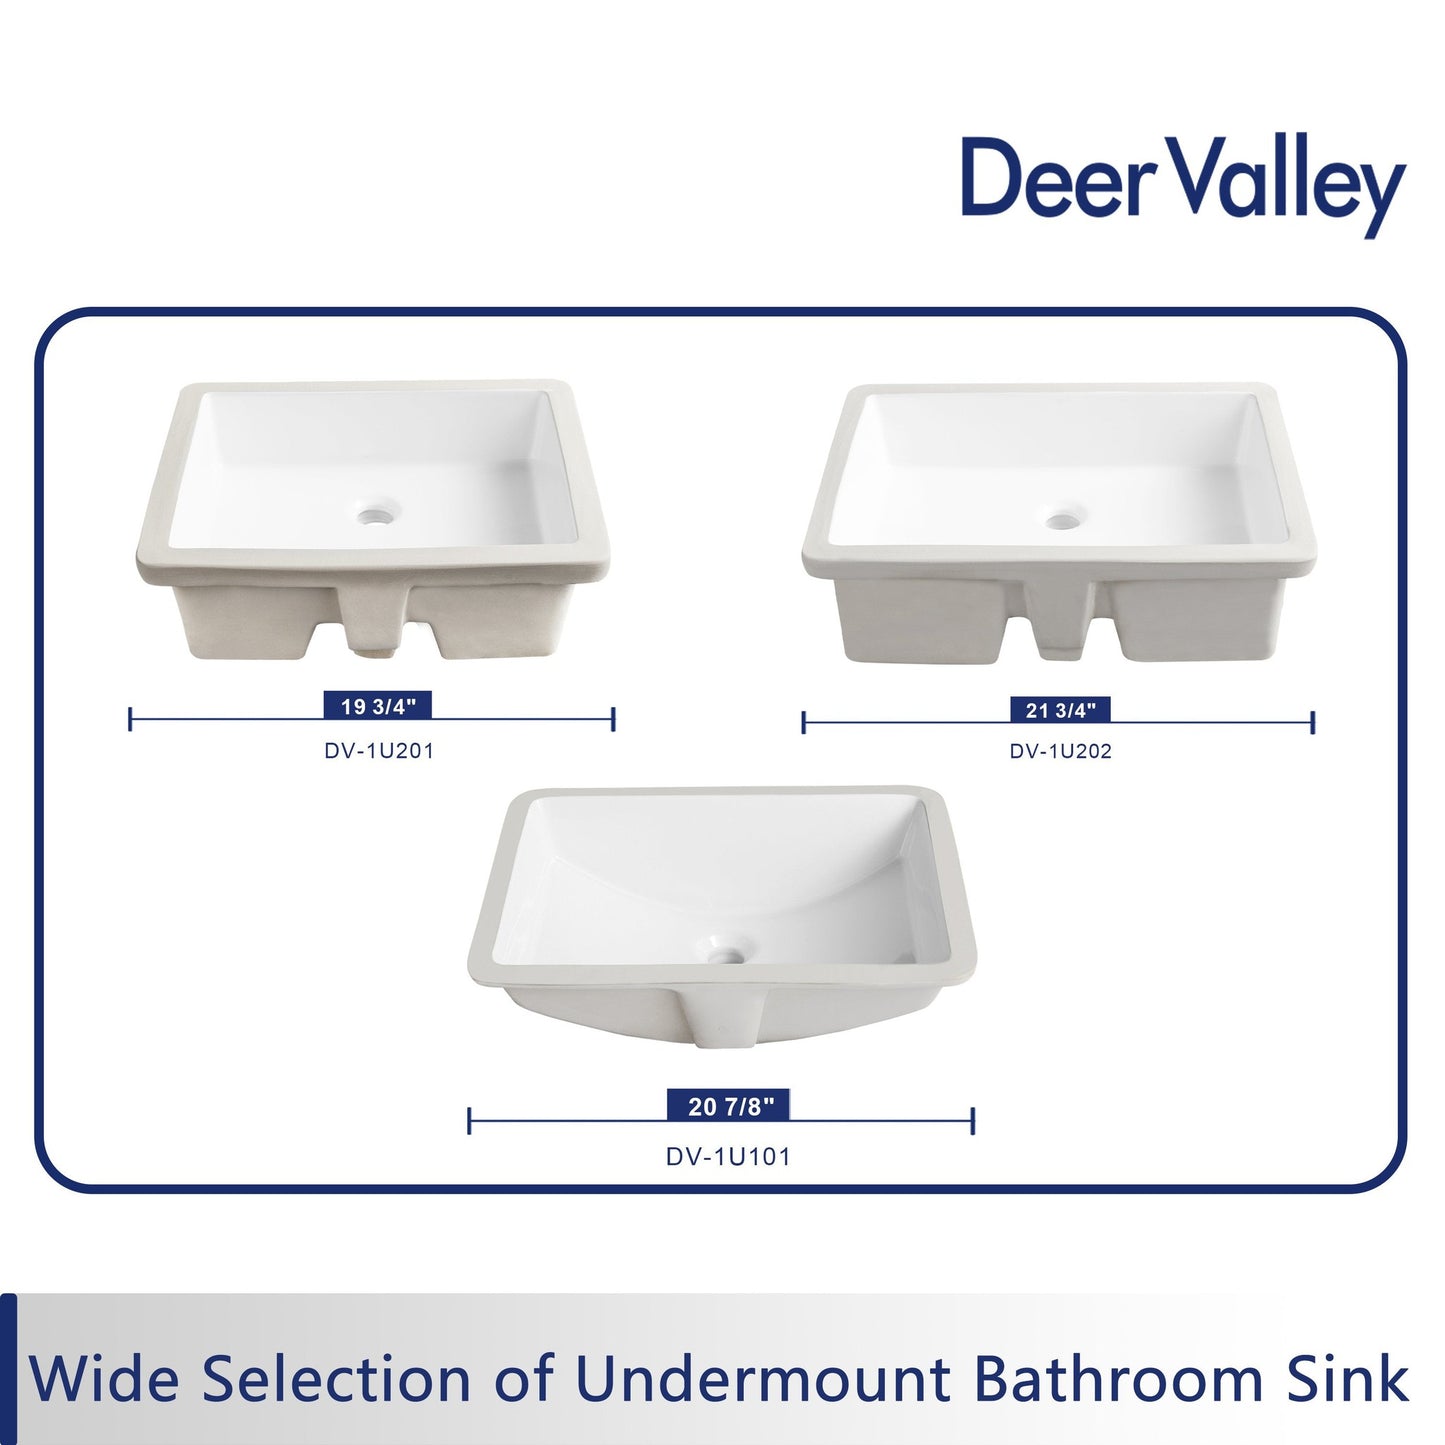 DeerValley Ally 21" x 15" Rectangular Beige Undermount Bathroom Sink With Overflow Hole